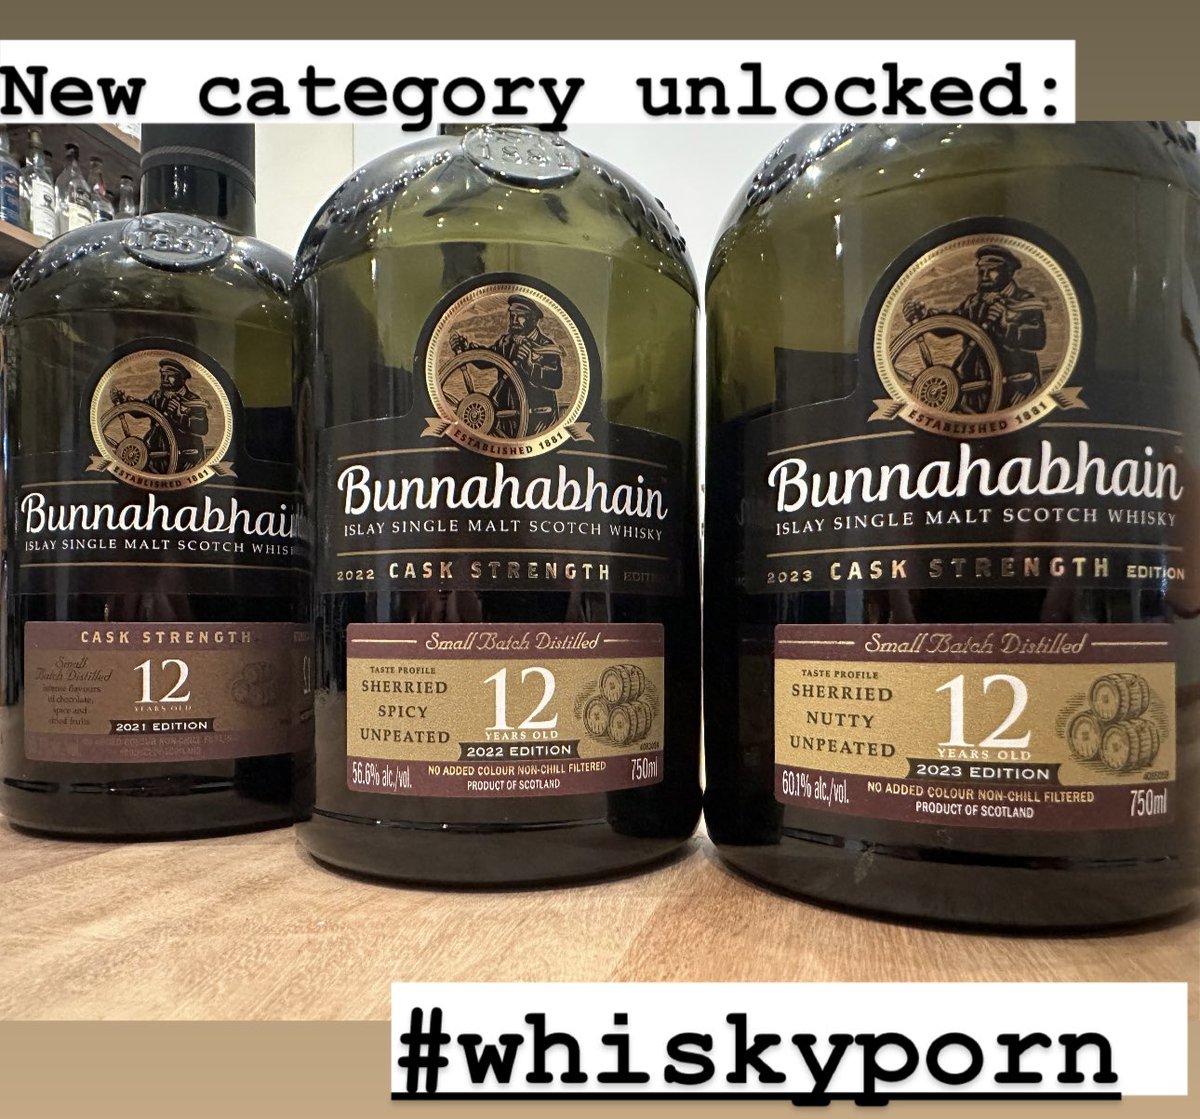 New category unlocked:  #whiskyporn